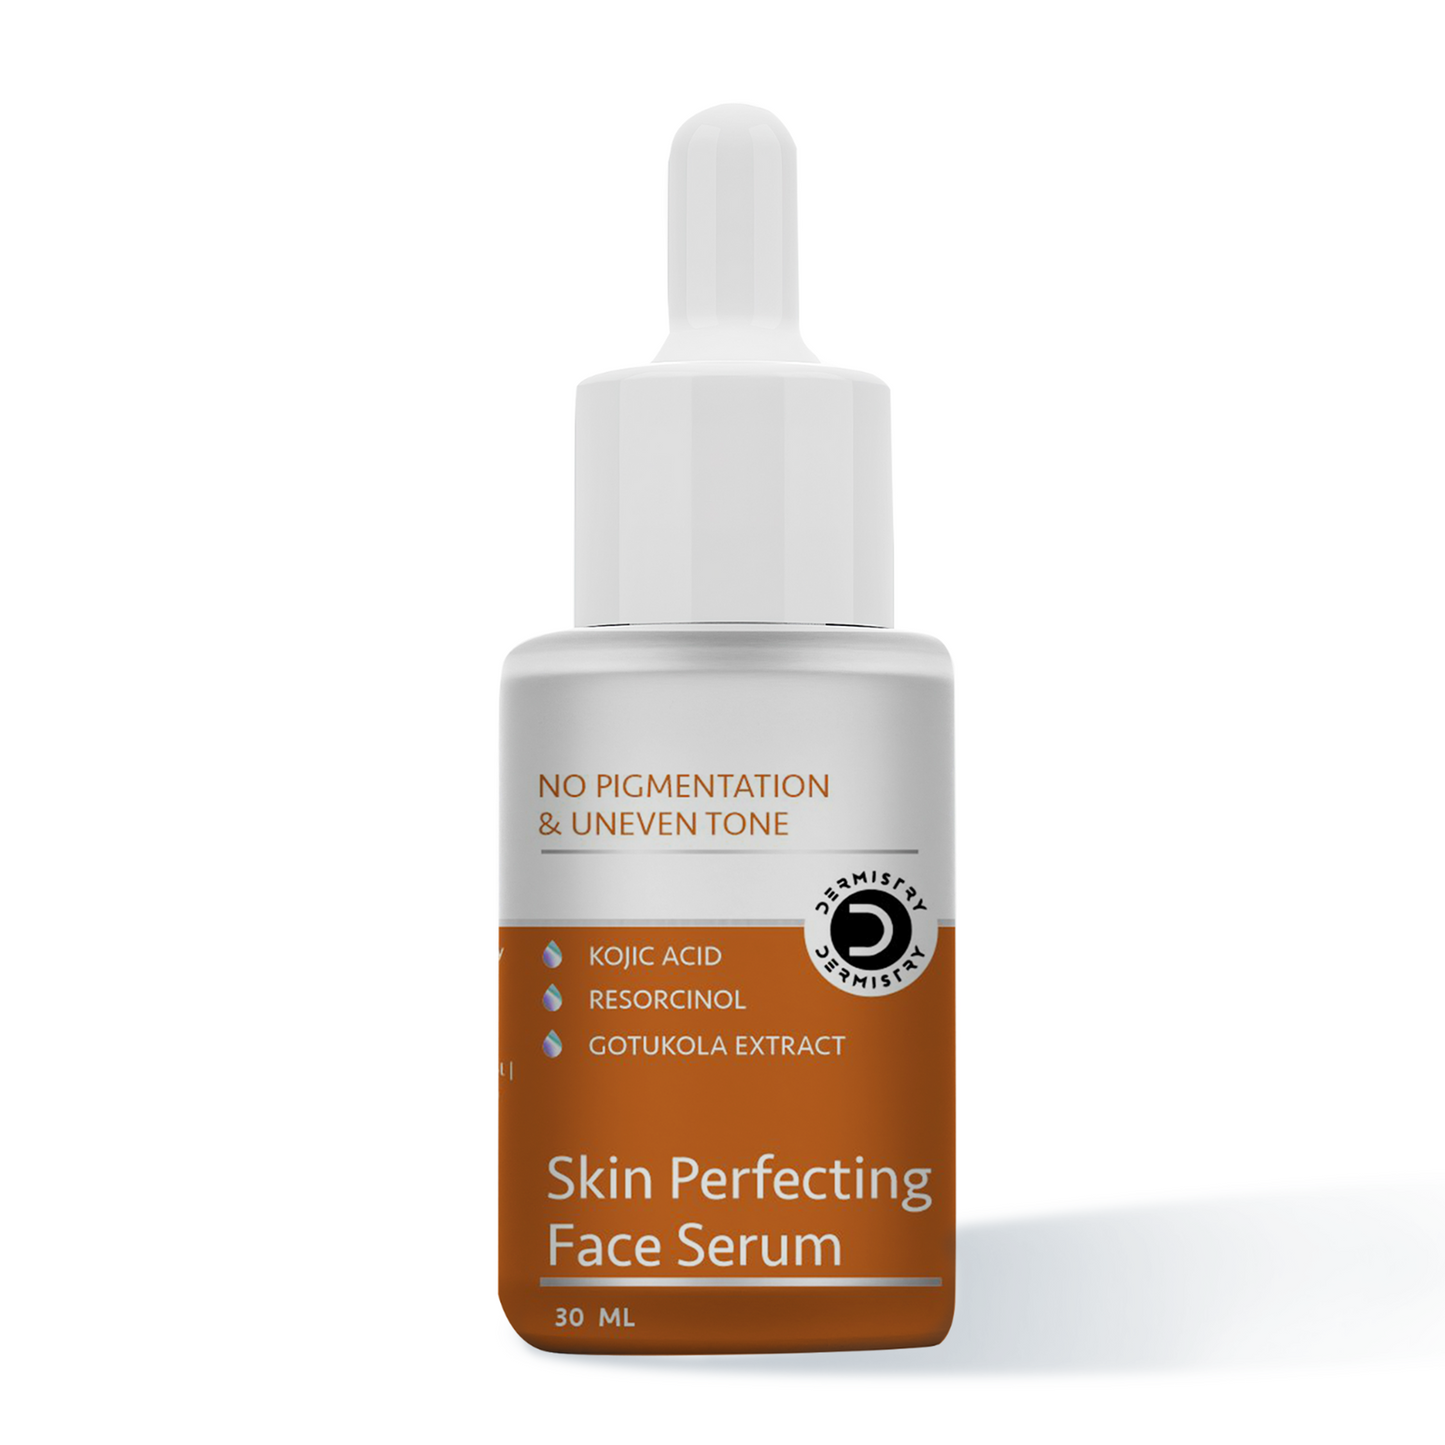 Dermistry No Pigmentation & Uneven Tone Skin Perfecting Face Serum, 30ml